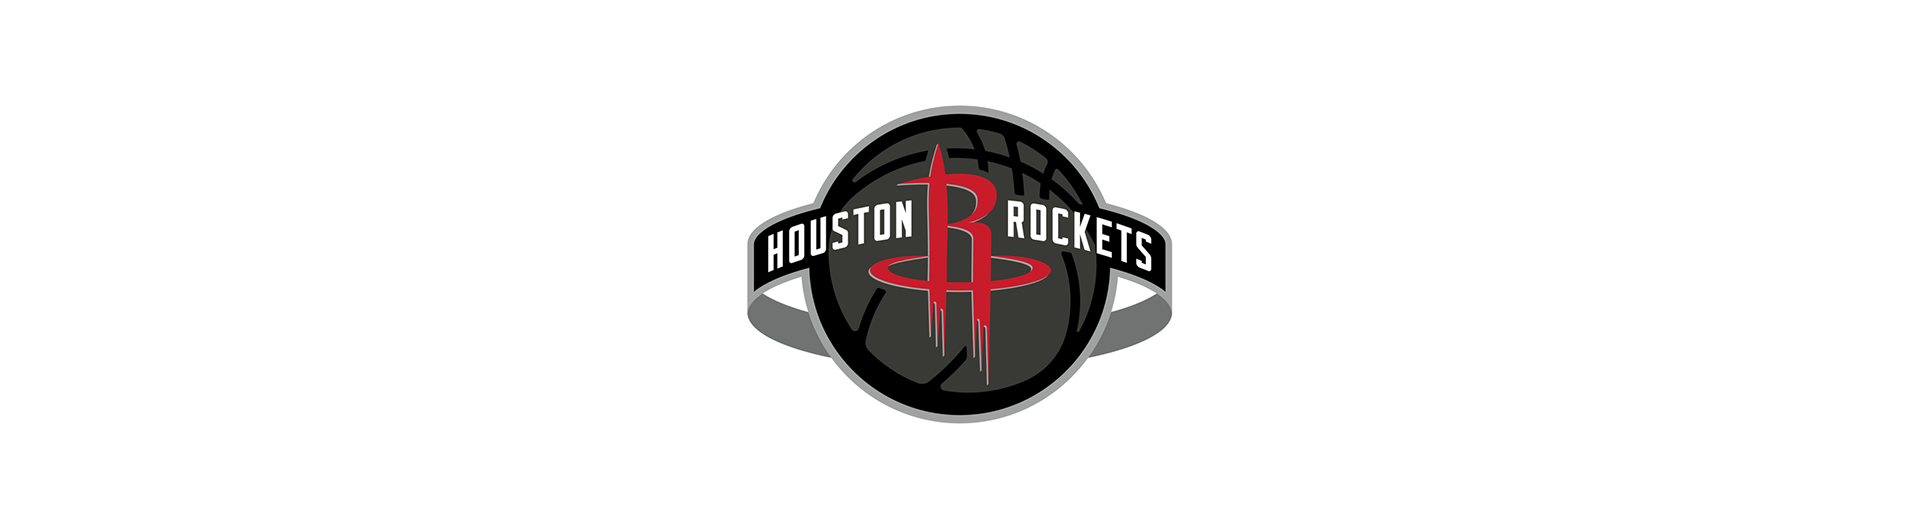 Houston Rockets (HOU)